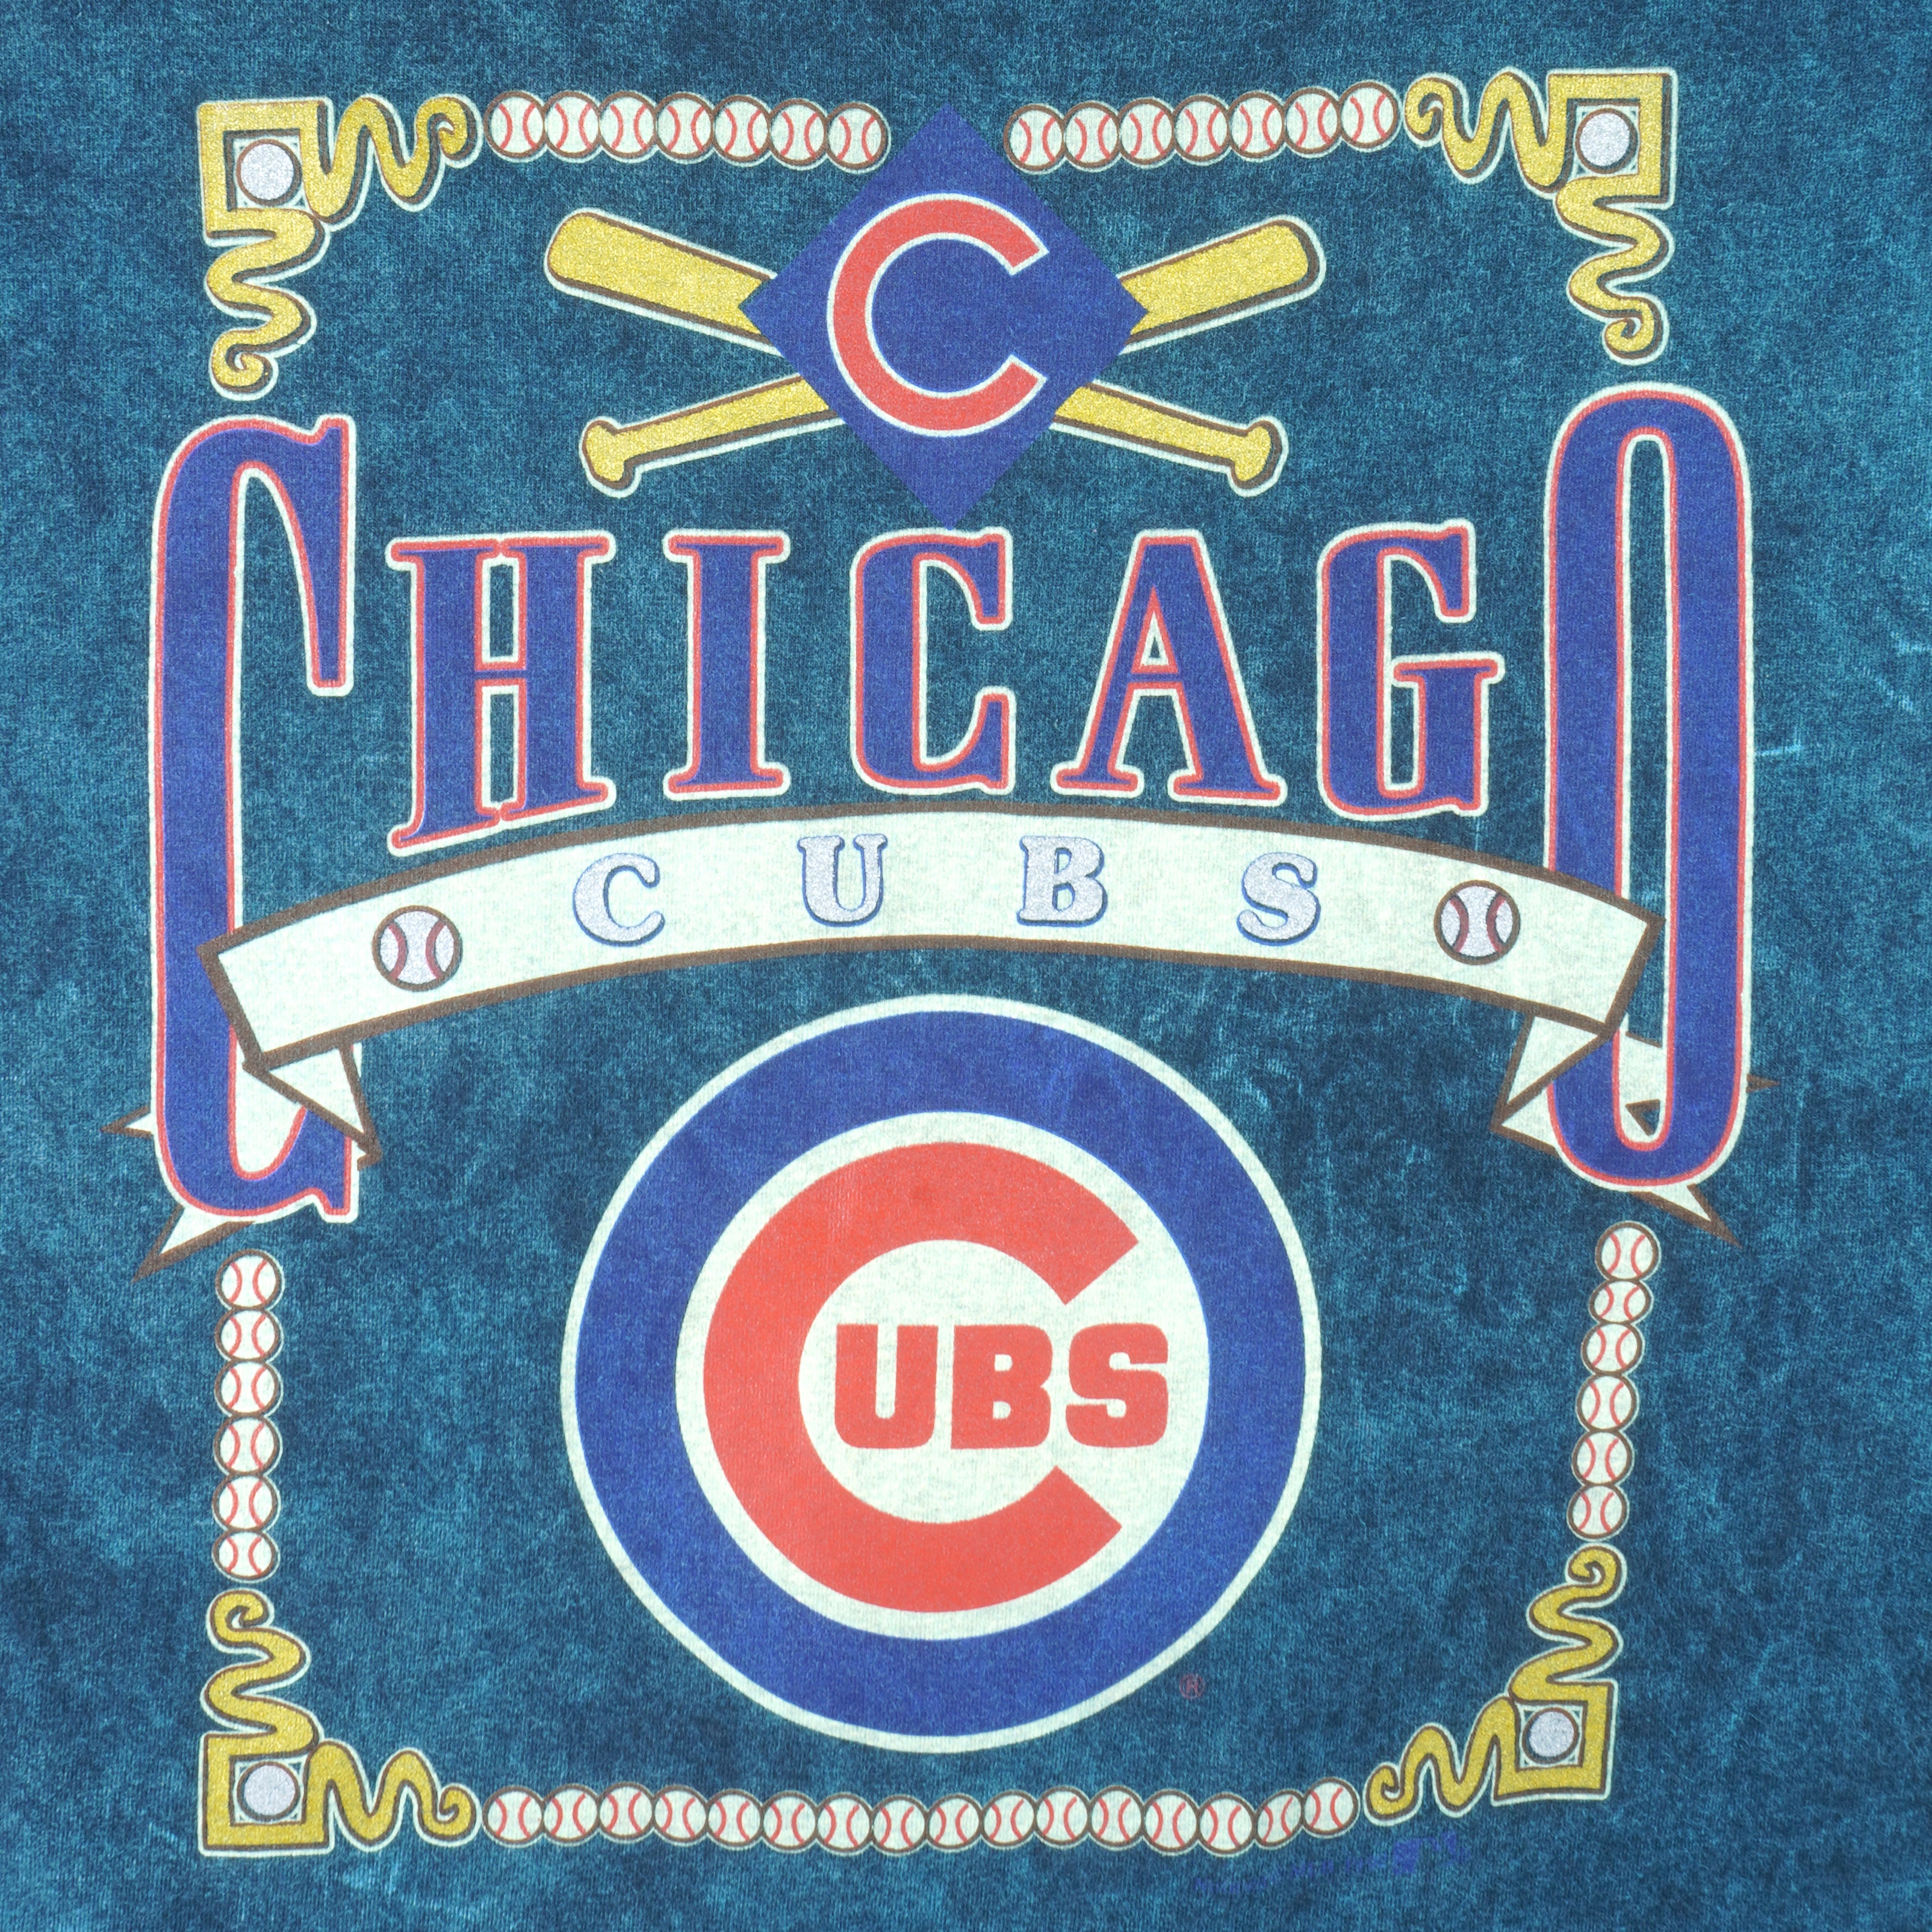 Vintage MLB (Nutmeg) - Chicago Cubs Tie Dye T-Shirt 1990s Large